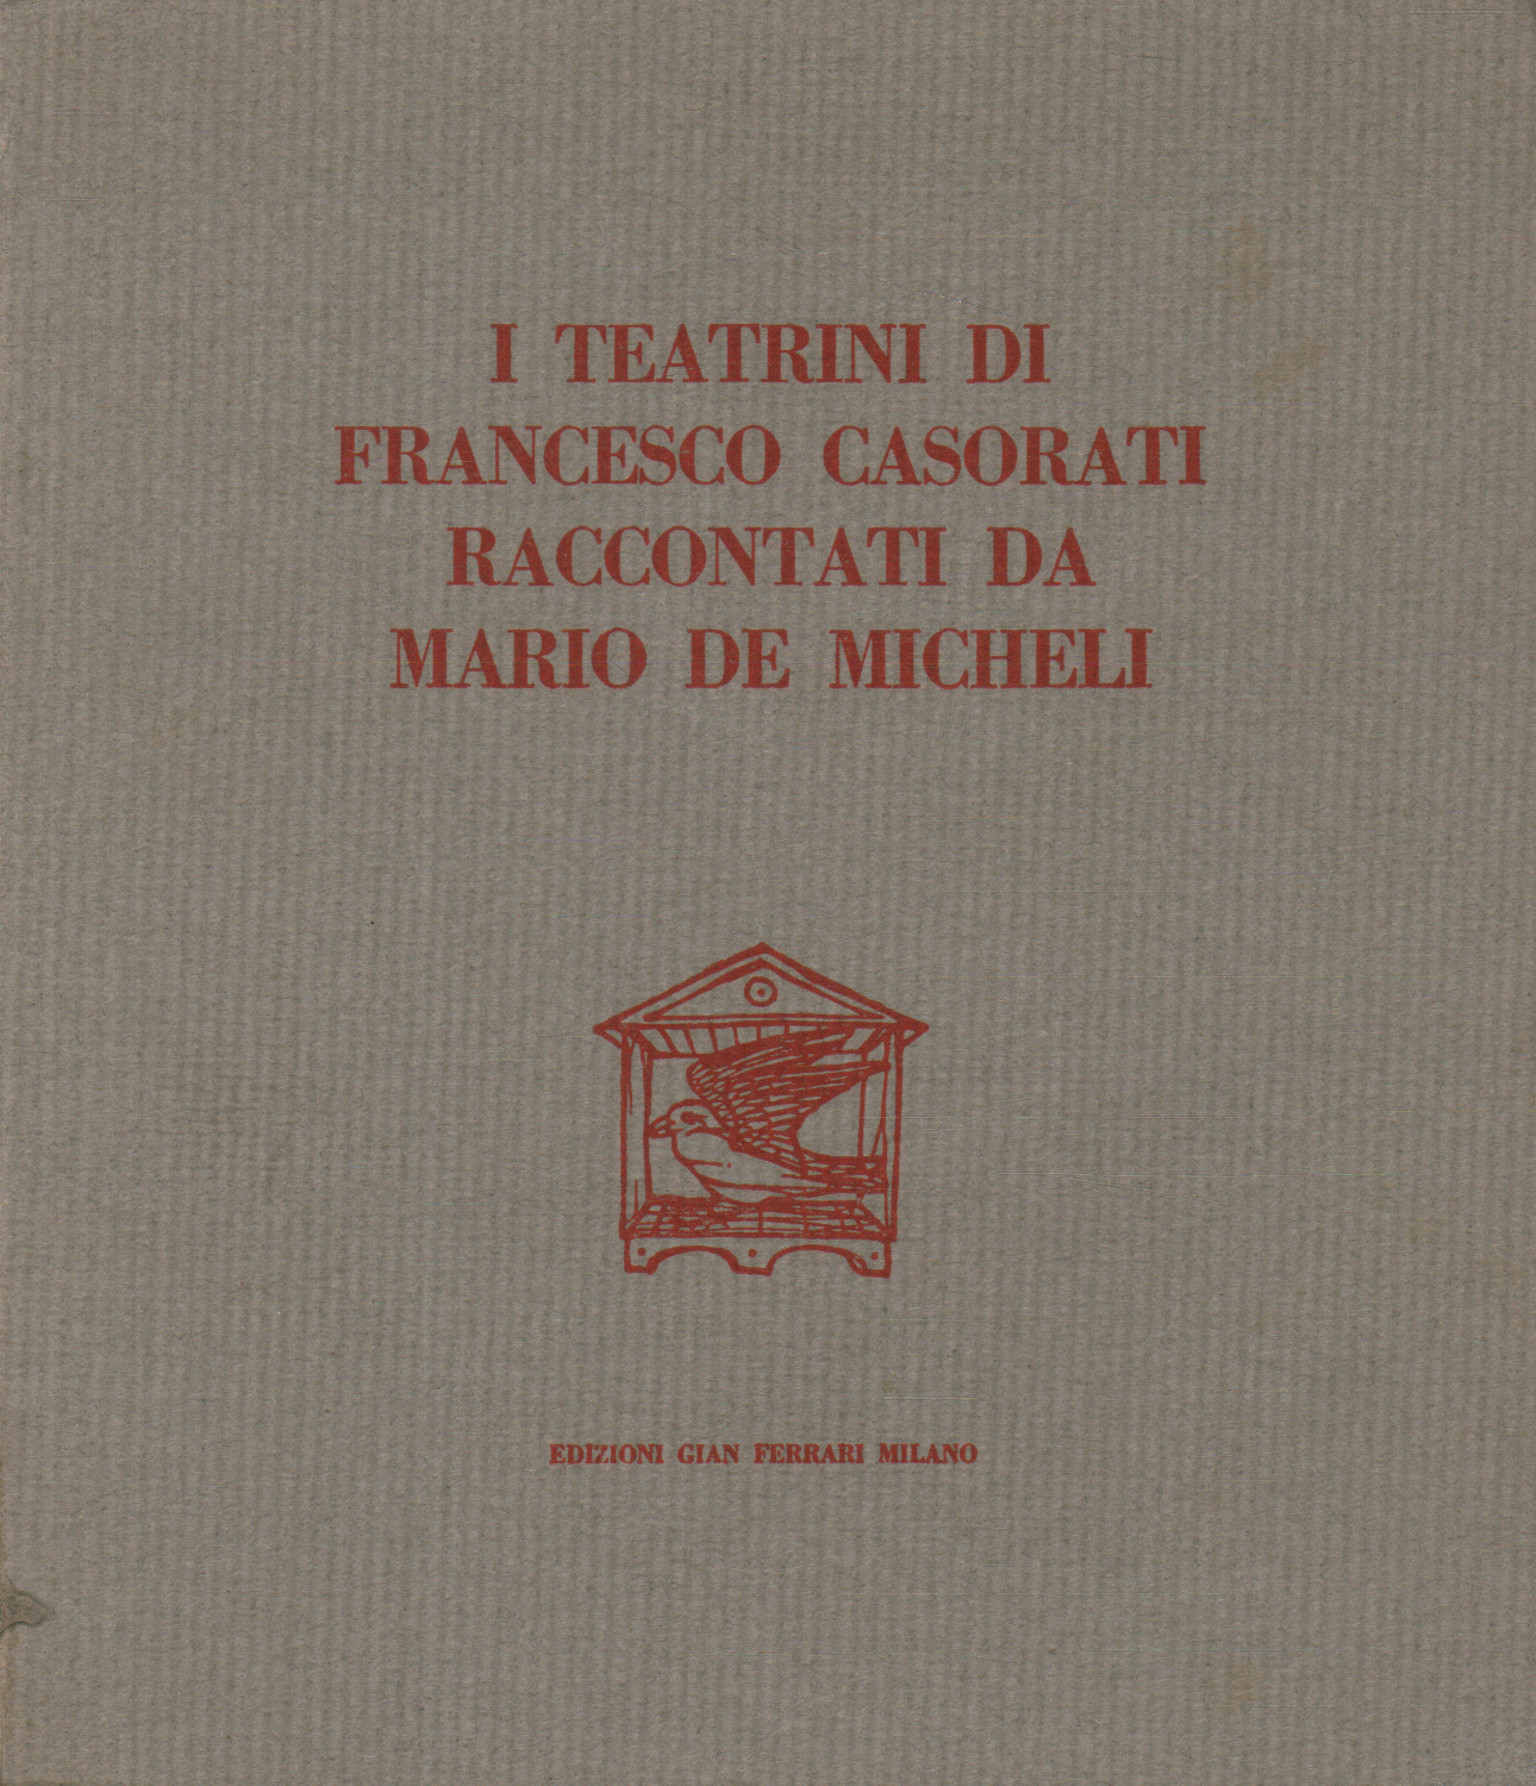 The theaters of Francesco Casorati told